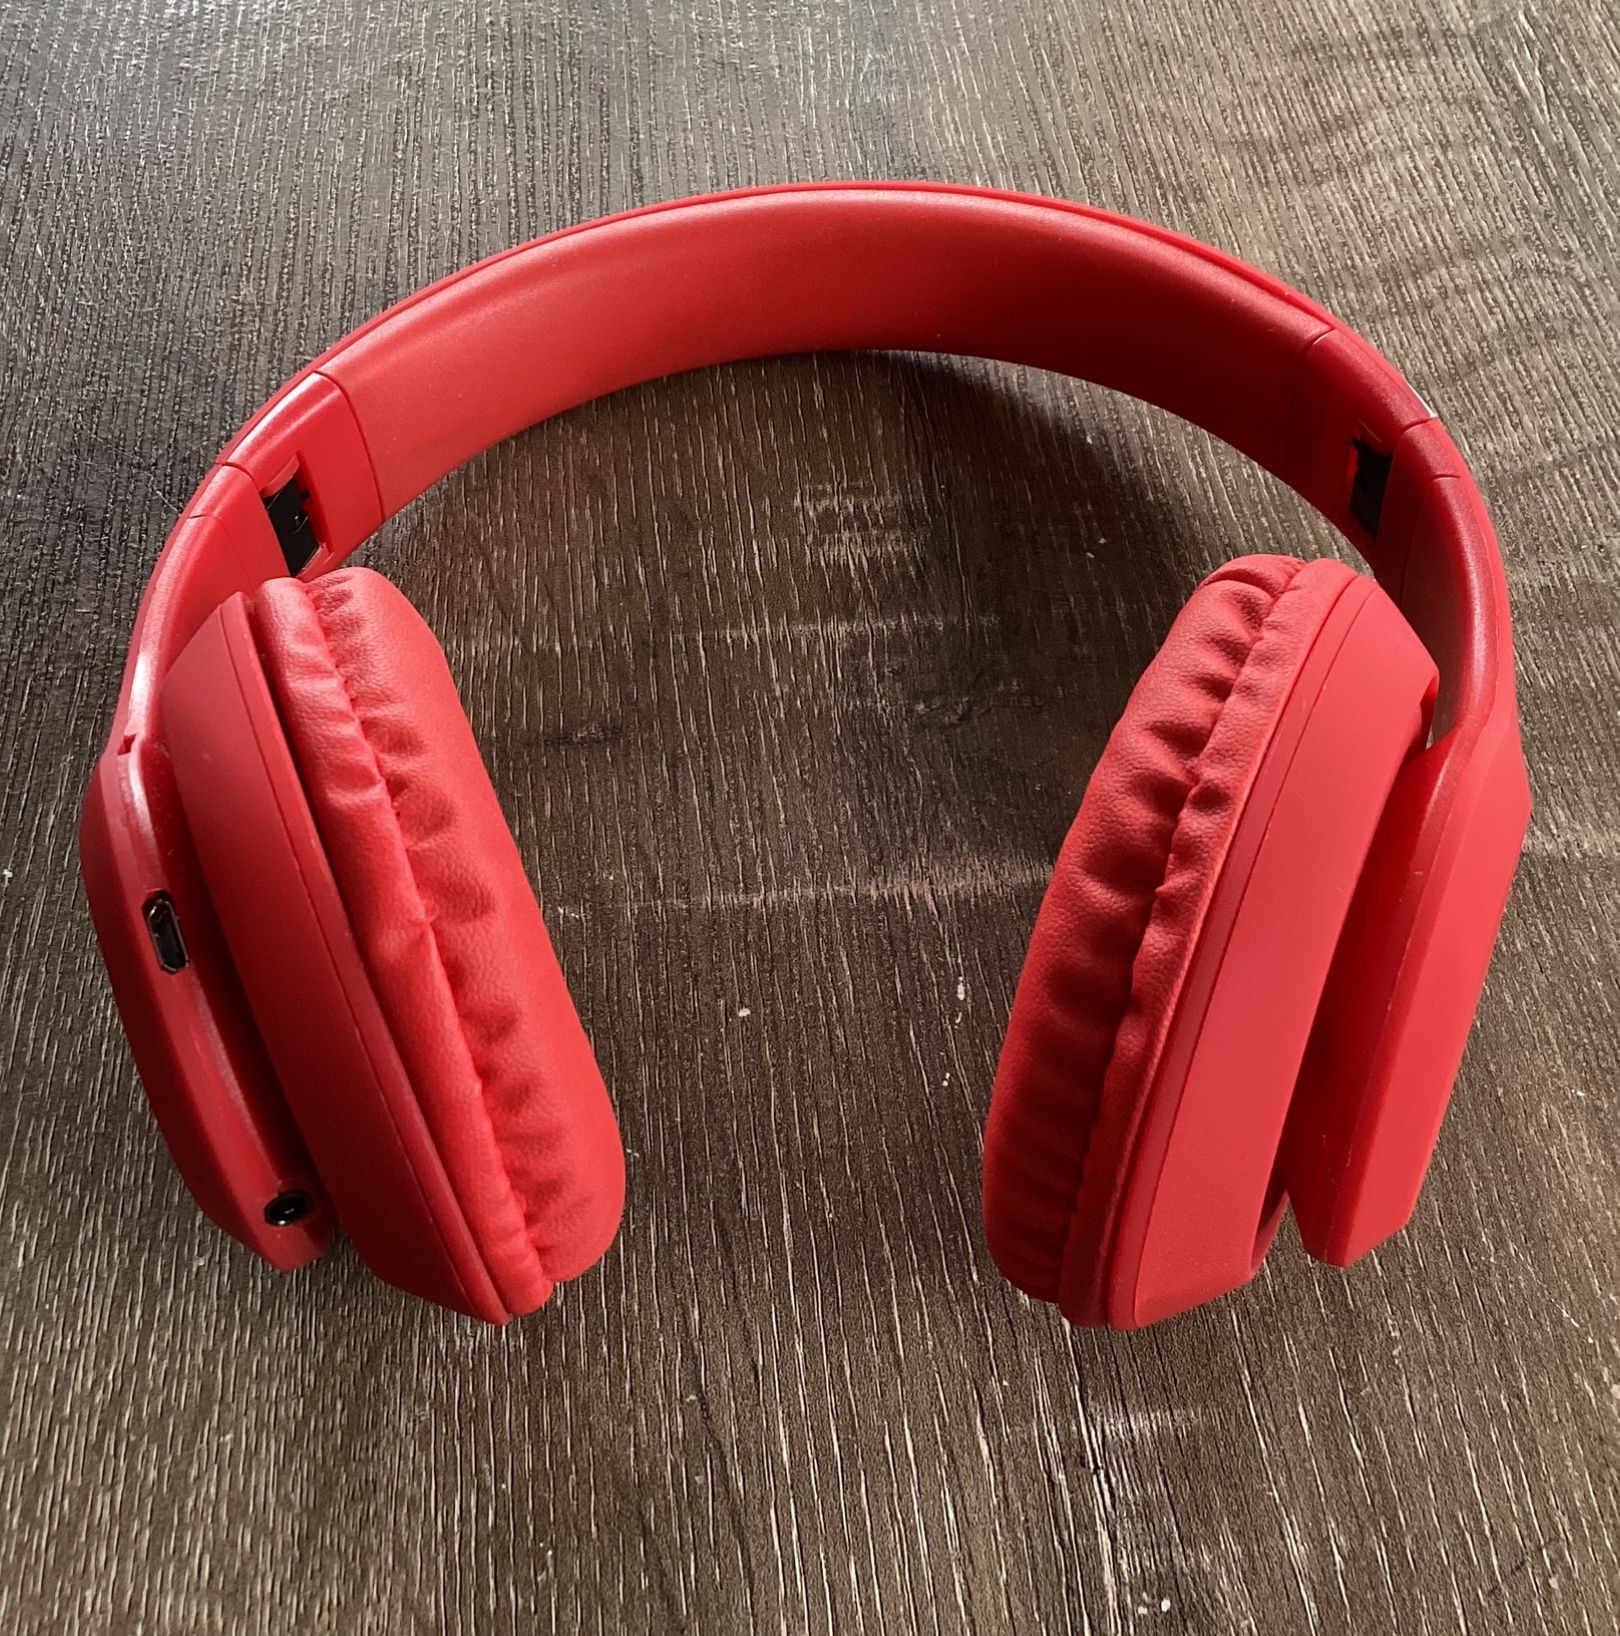 Beats Solo3 Wireless Headphones Red